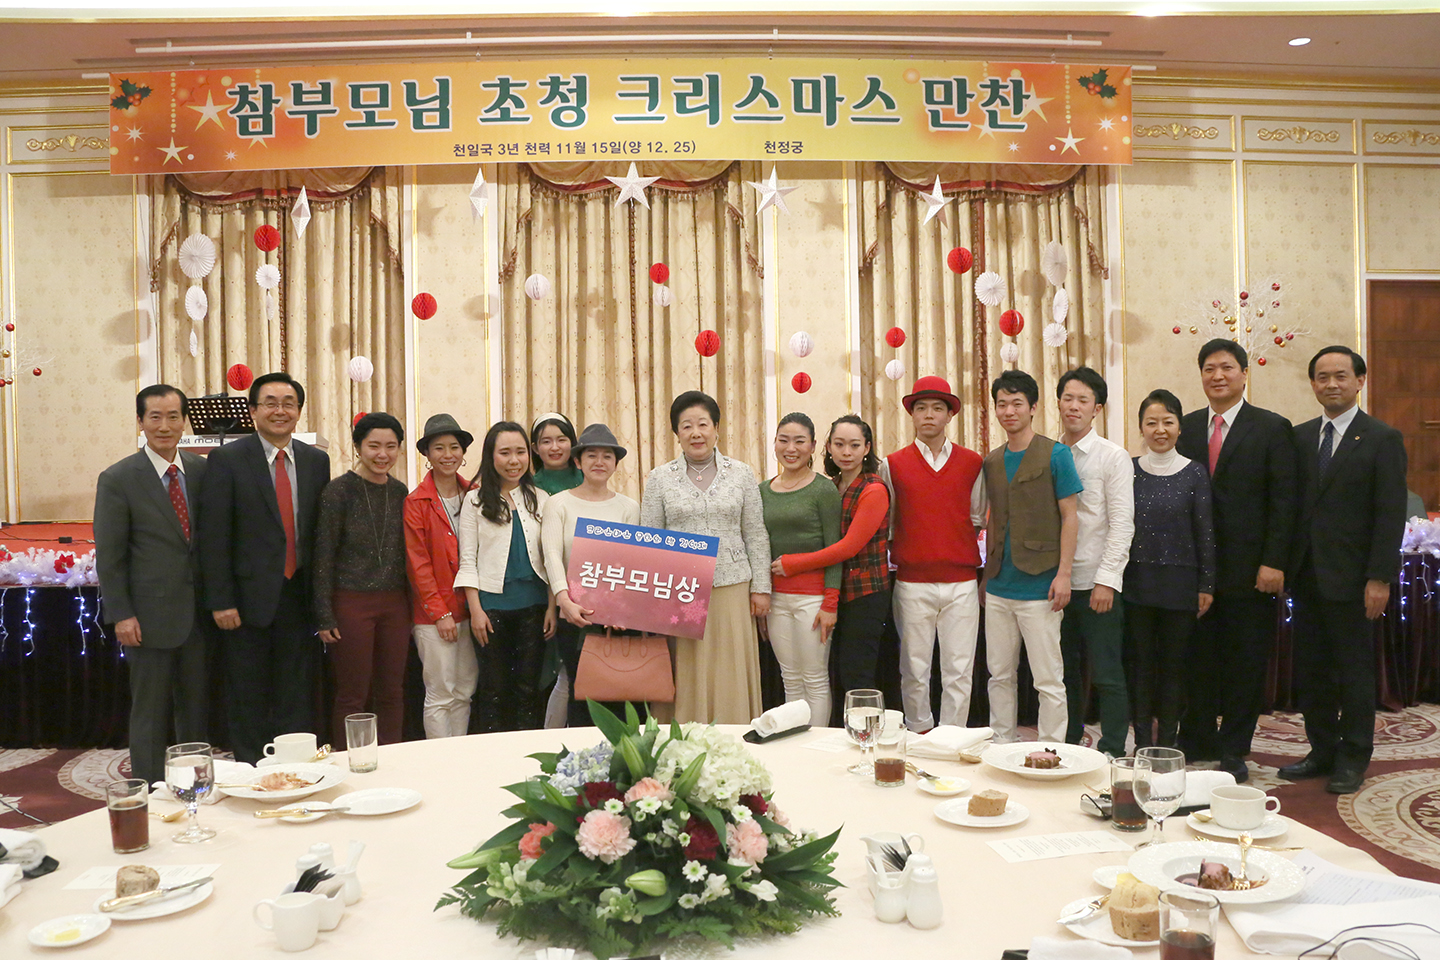 Christmas Banquet (December 25, 2015) Cheon Jeong Gung